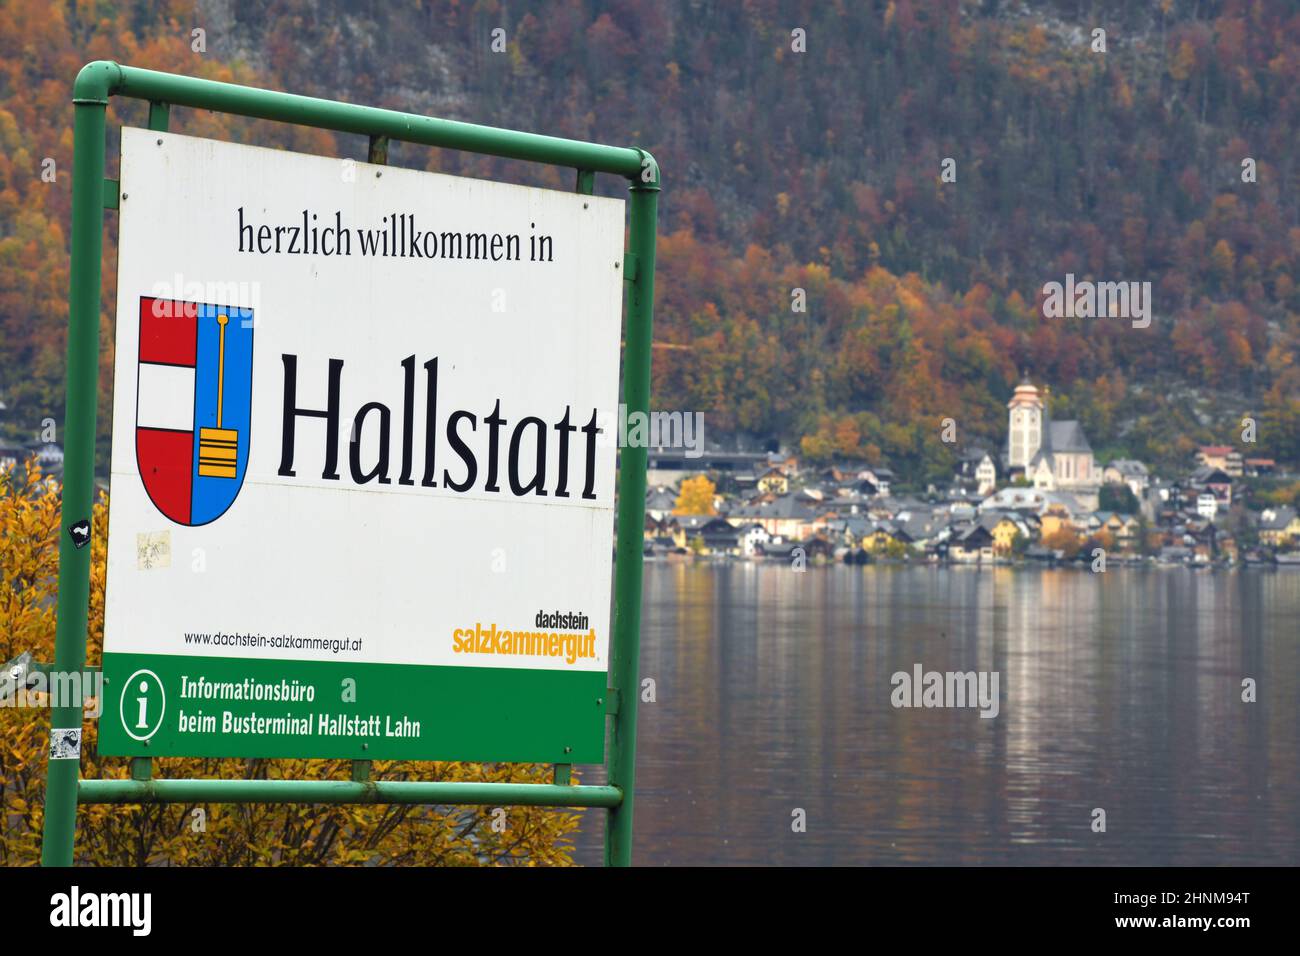 Hallstatt am Hallstätter See im Herbst, Österreich, Europa - Hallstatt on Lake Hallstatt in Autumn, Austria, Europe Stock Photo